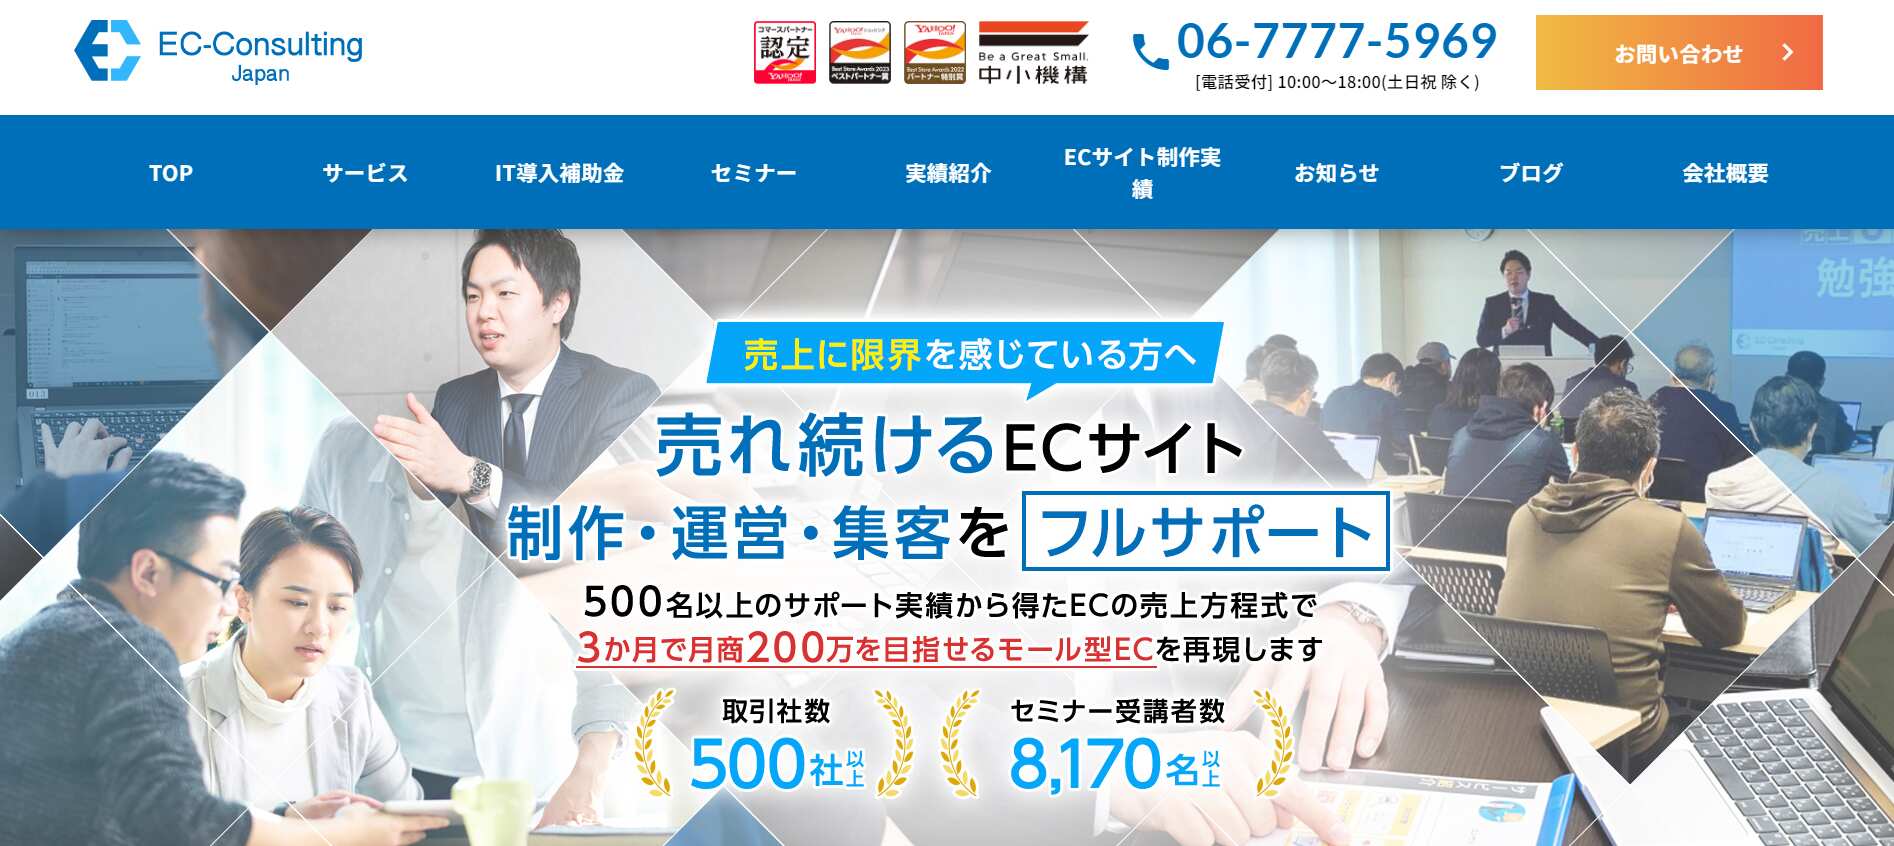 EC-Consulting Japan株式会社